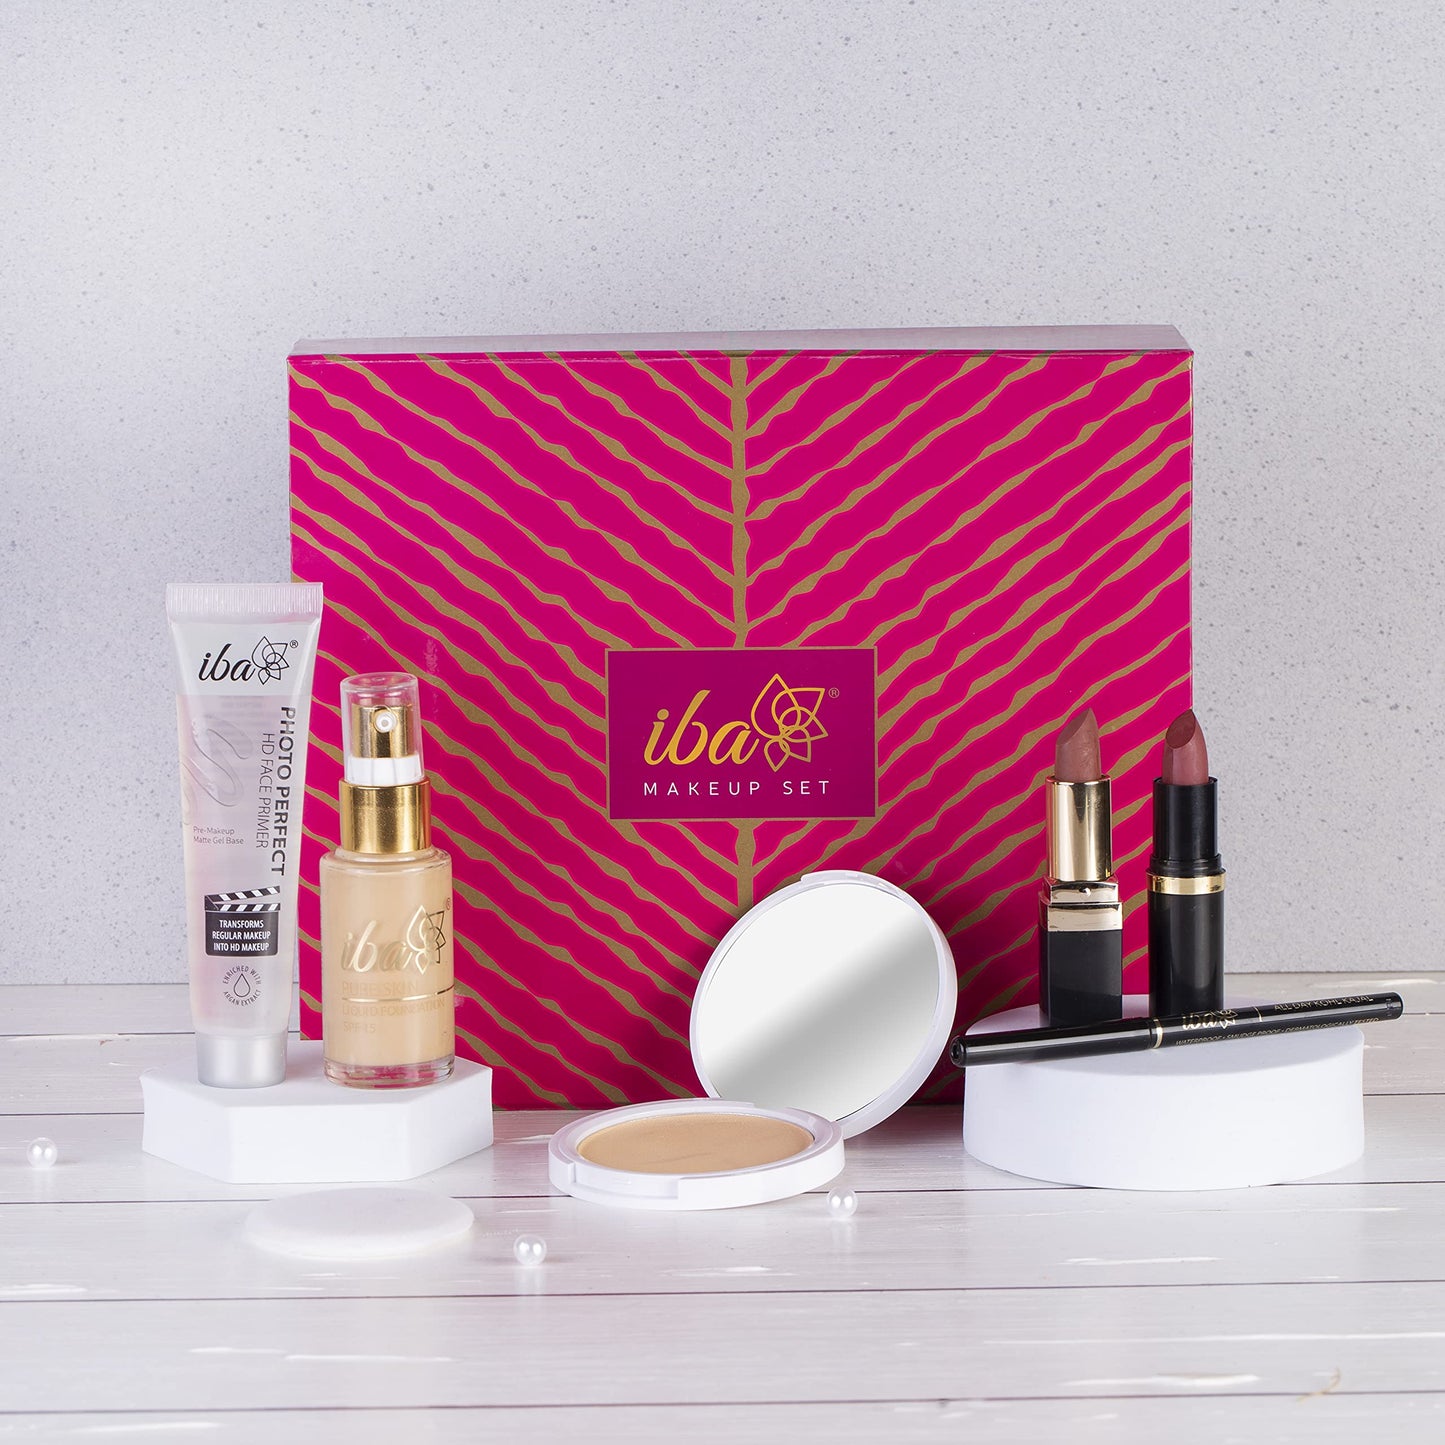 Iba Makeup Gift Set for Women (Medium) - Foundation, Compact, Primer, Lipsticks, Kajal | Long Lasting | Full Coverage | 100% Vegan & Cruelty-Free (6 items in the set)